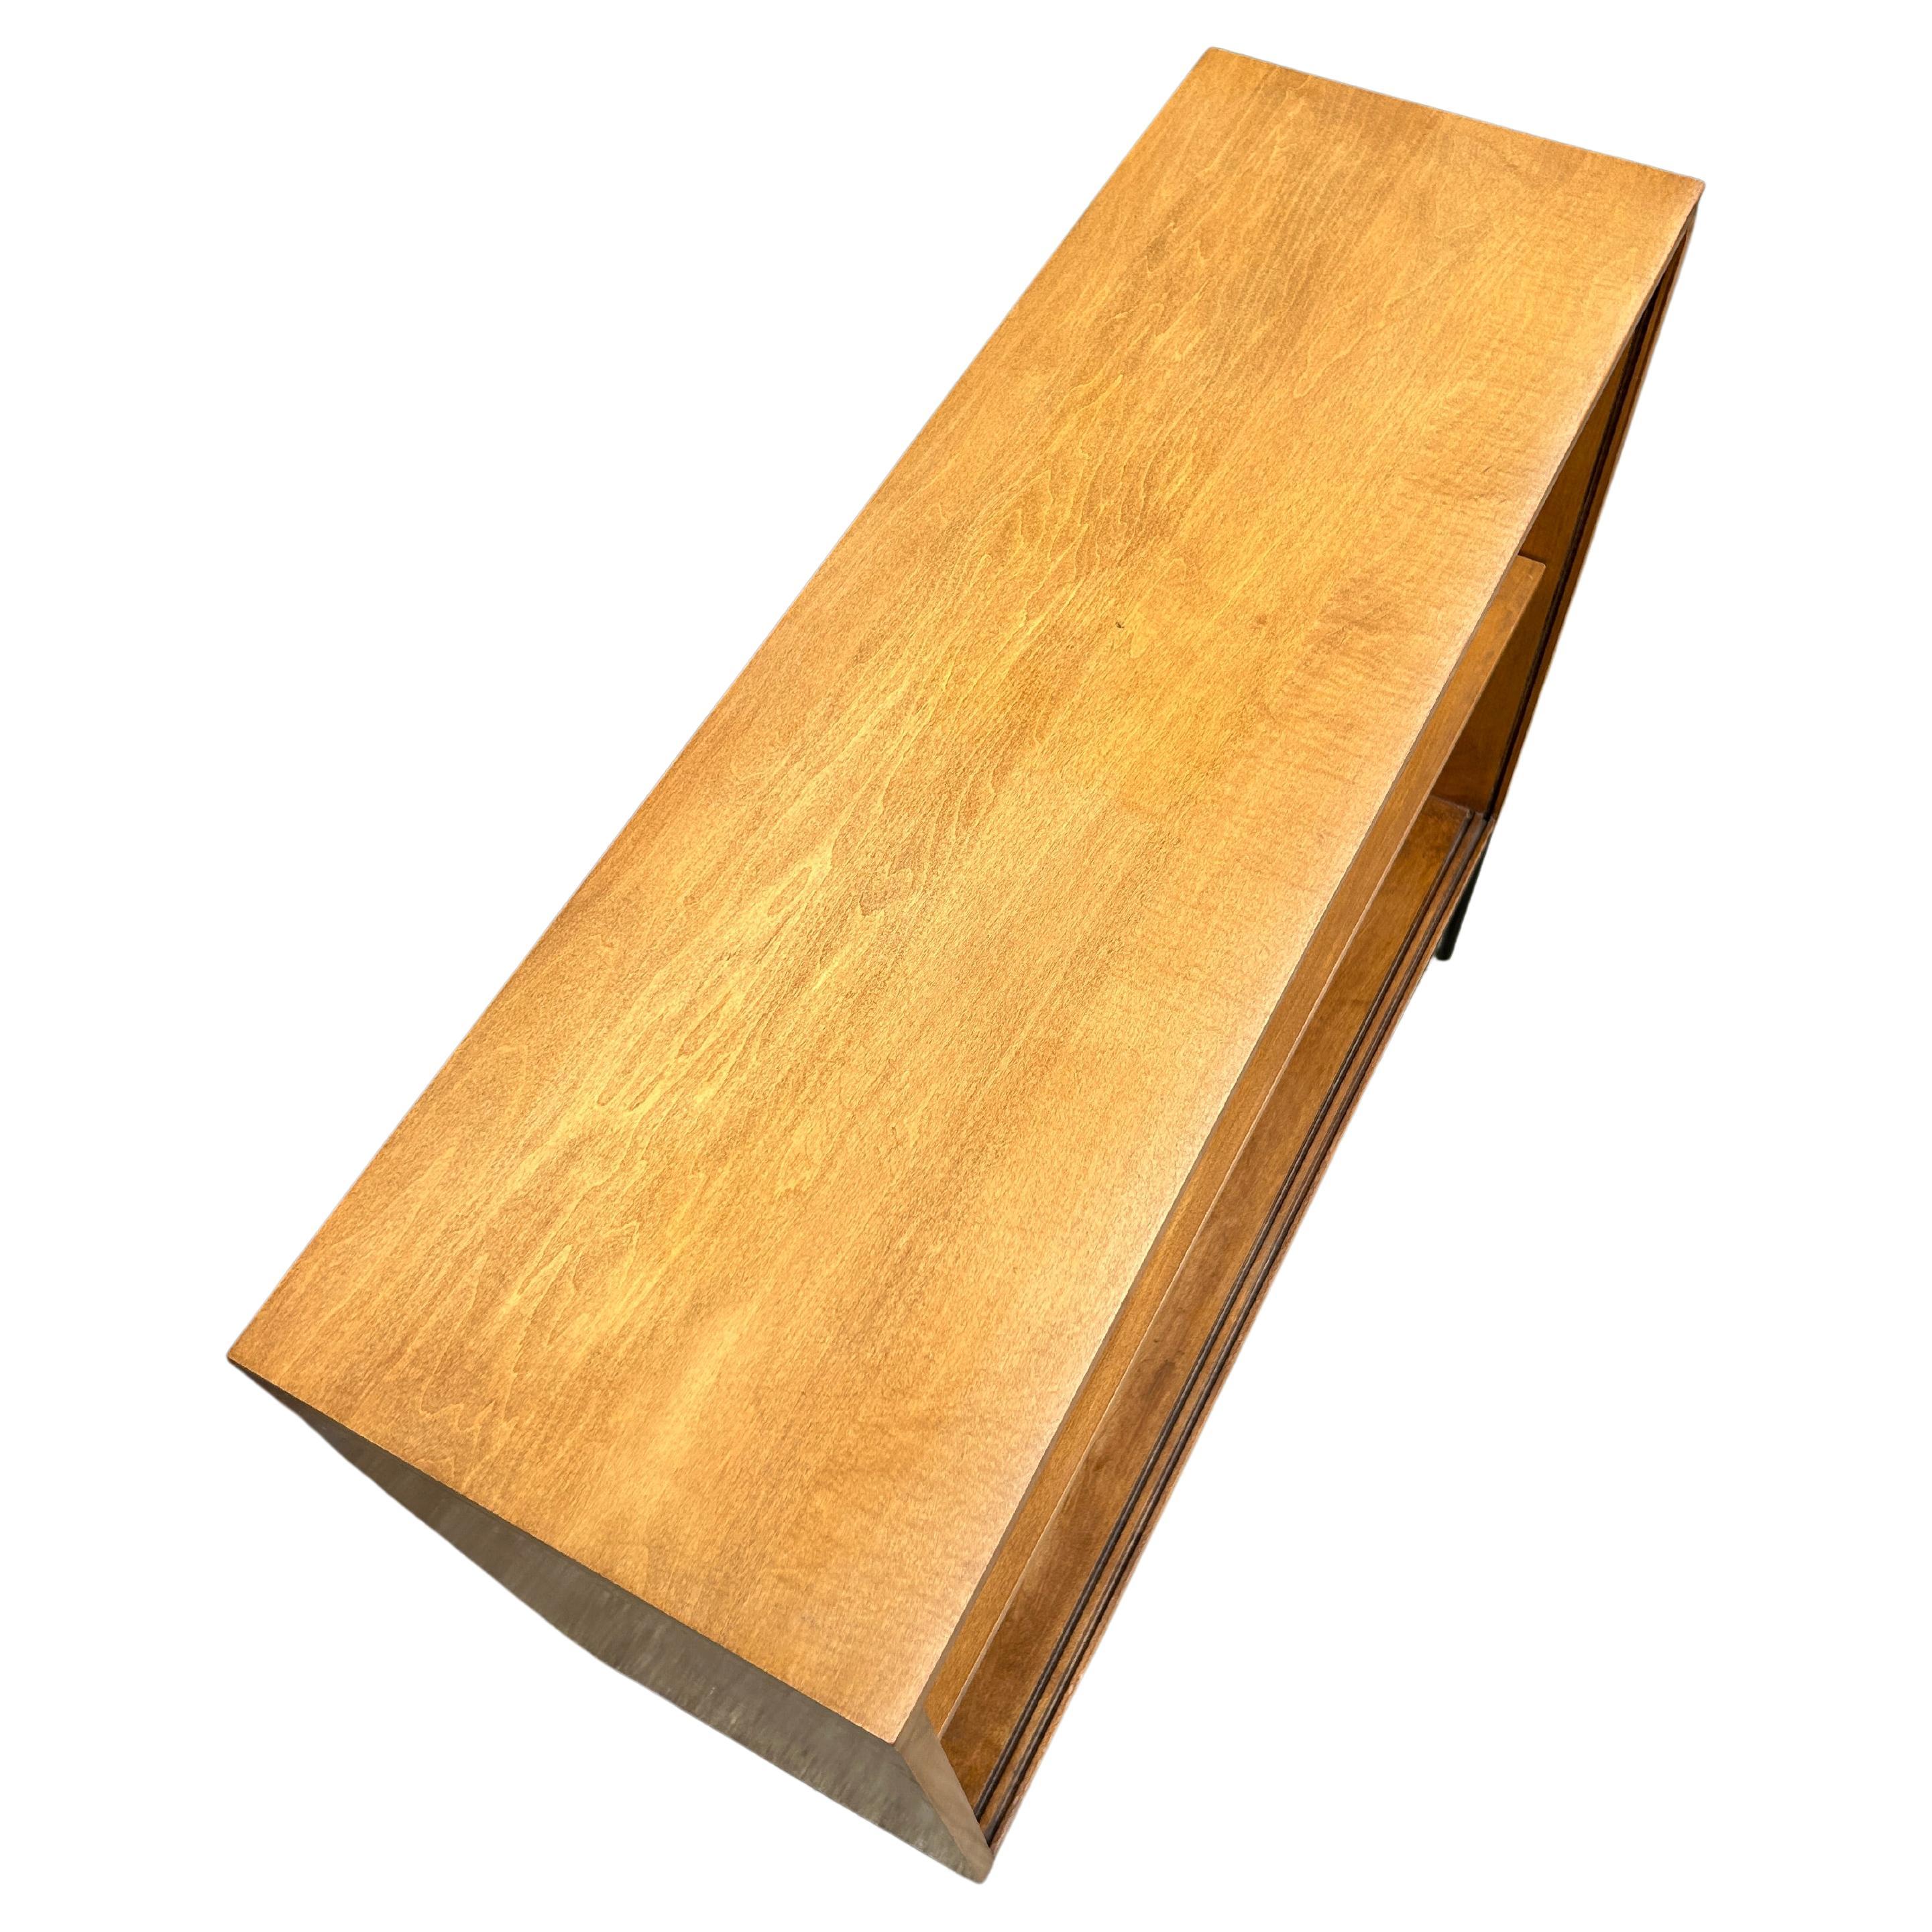 American Midcentury Paul McCobb Single Bookcase #1516 Iron Base Adjustable Shelf For Sale